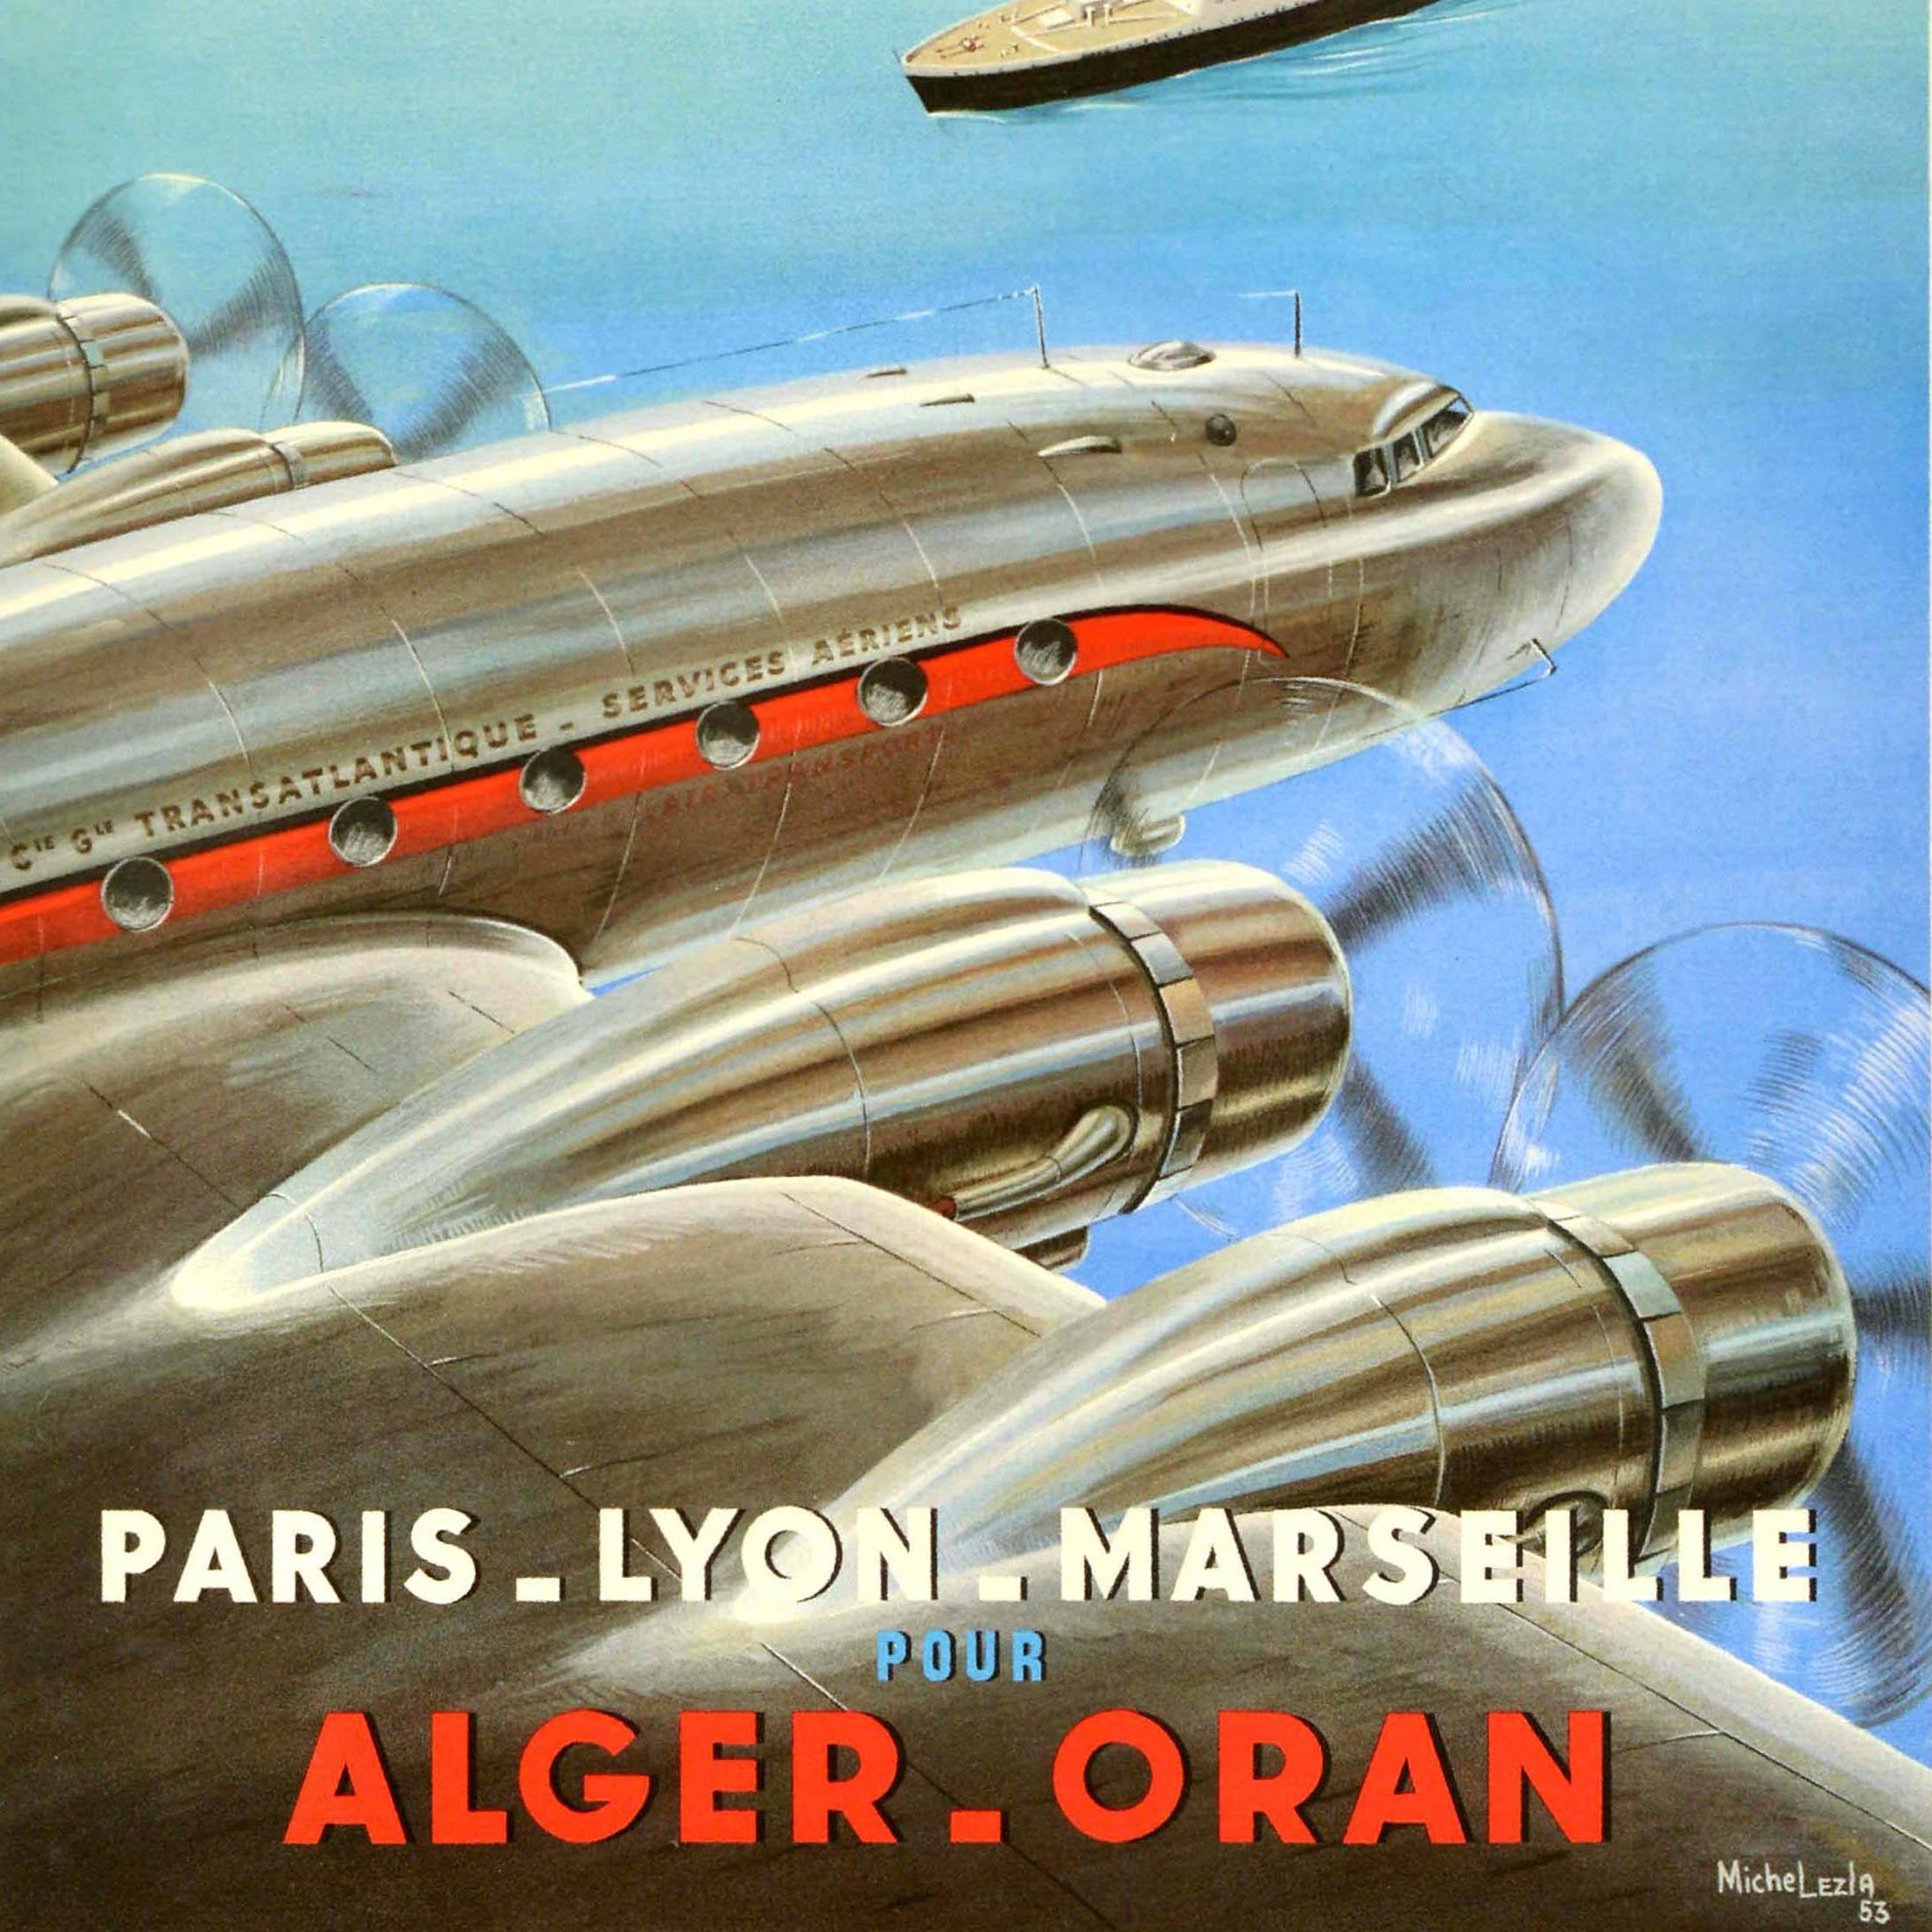 Original Vintage Travel Poster Alger Oran Air Algerian Airways Douglas DC-4 In Good Condition For Sale In London, GB